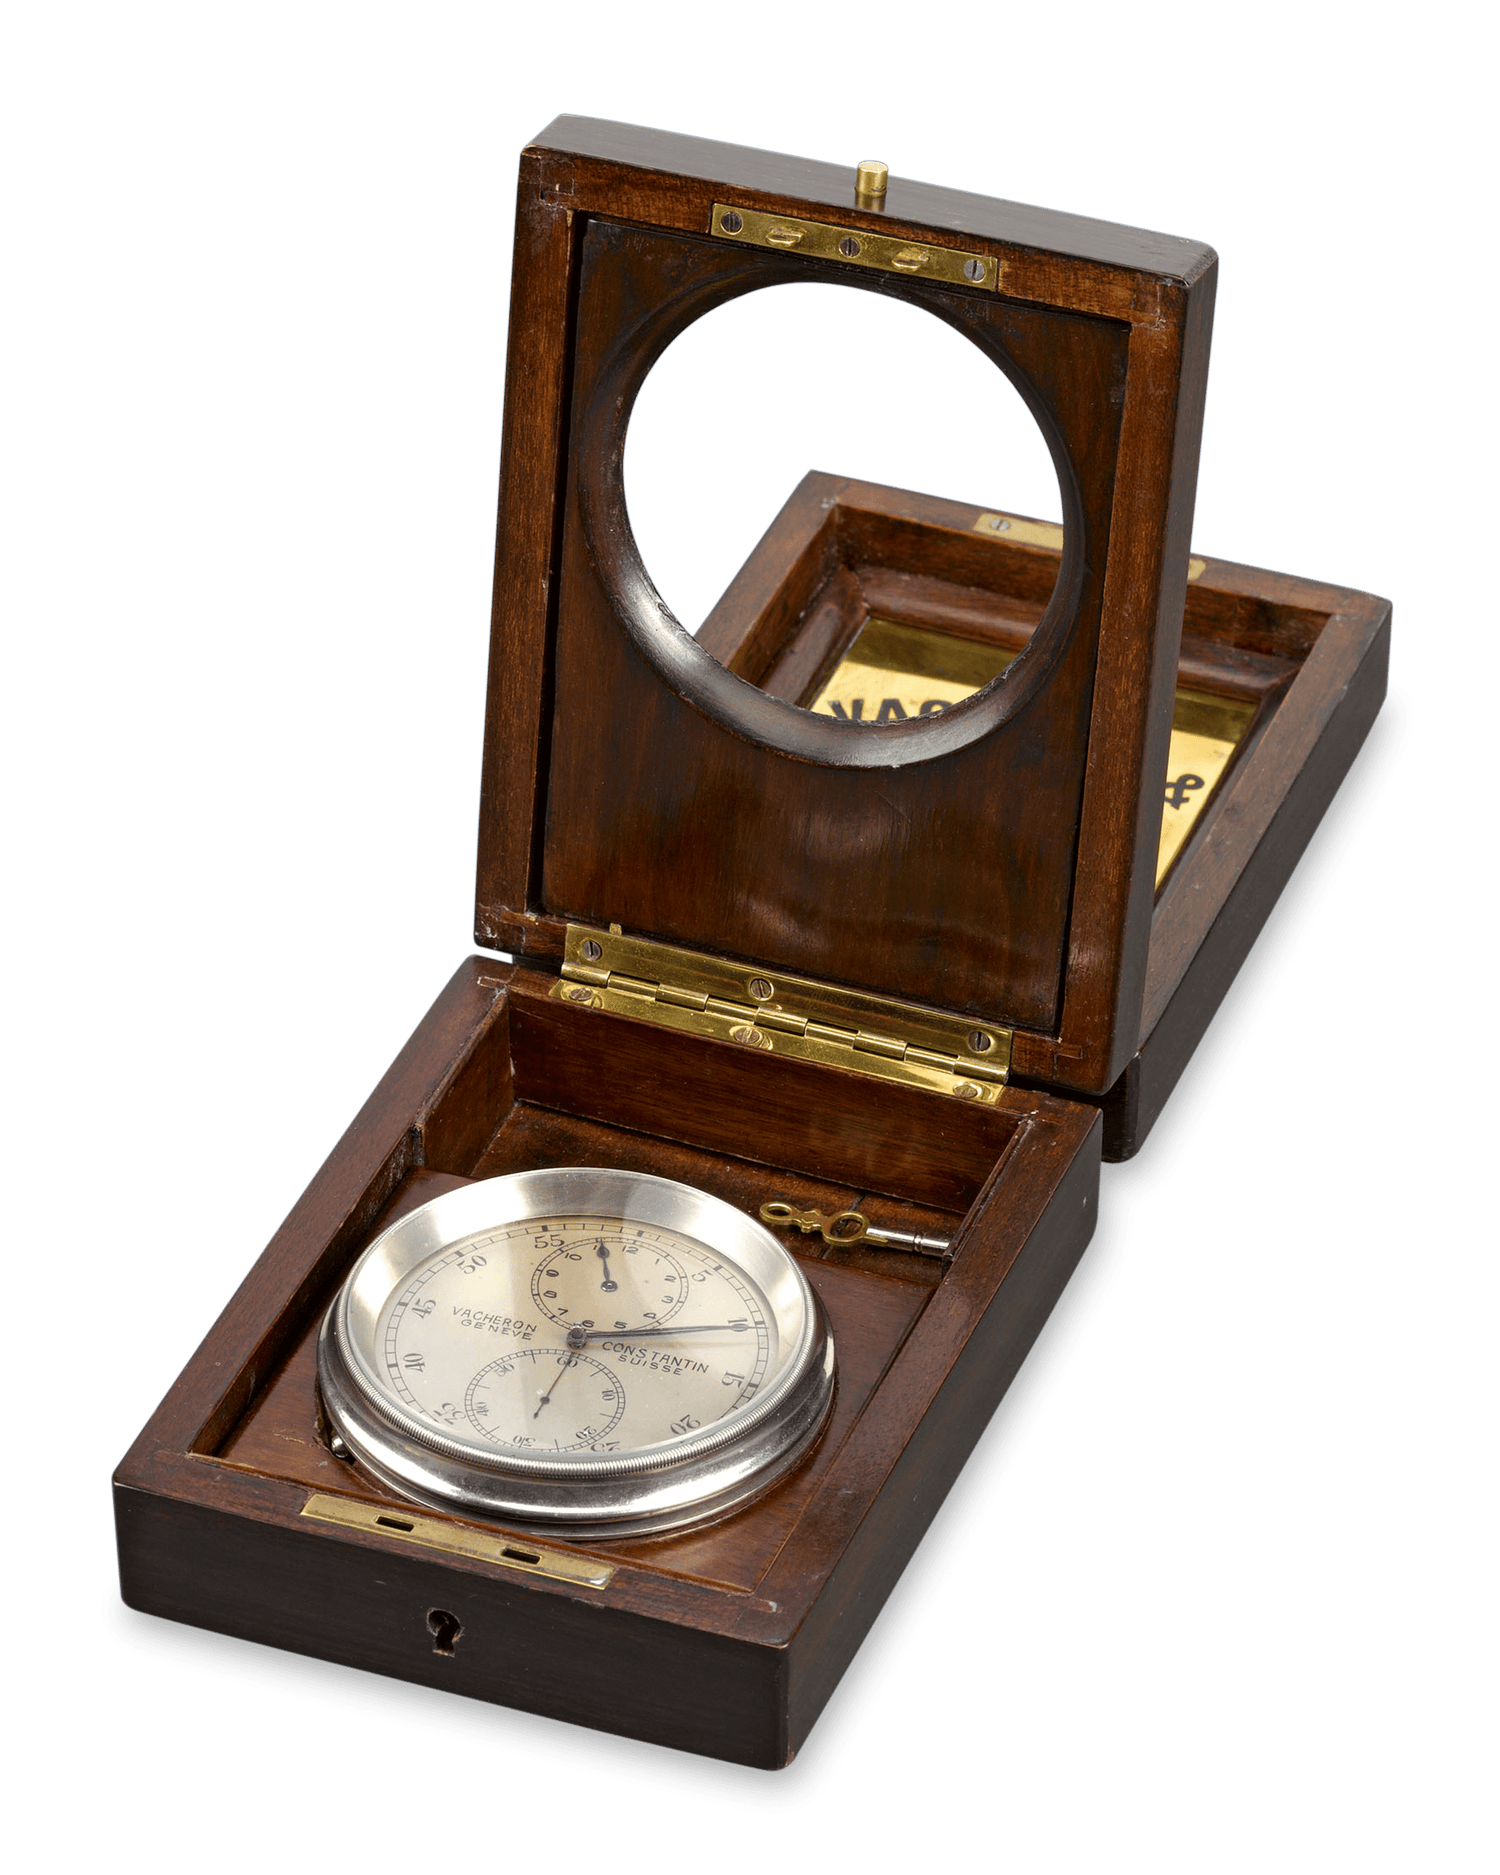 Vacheron Constantin Chronometer